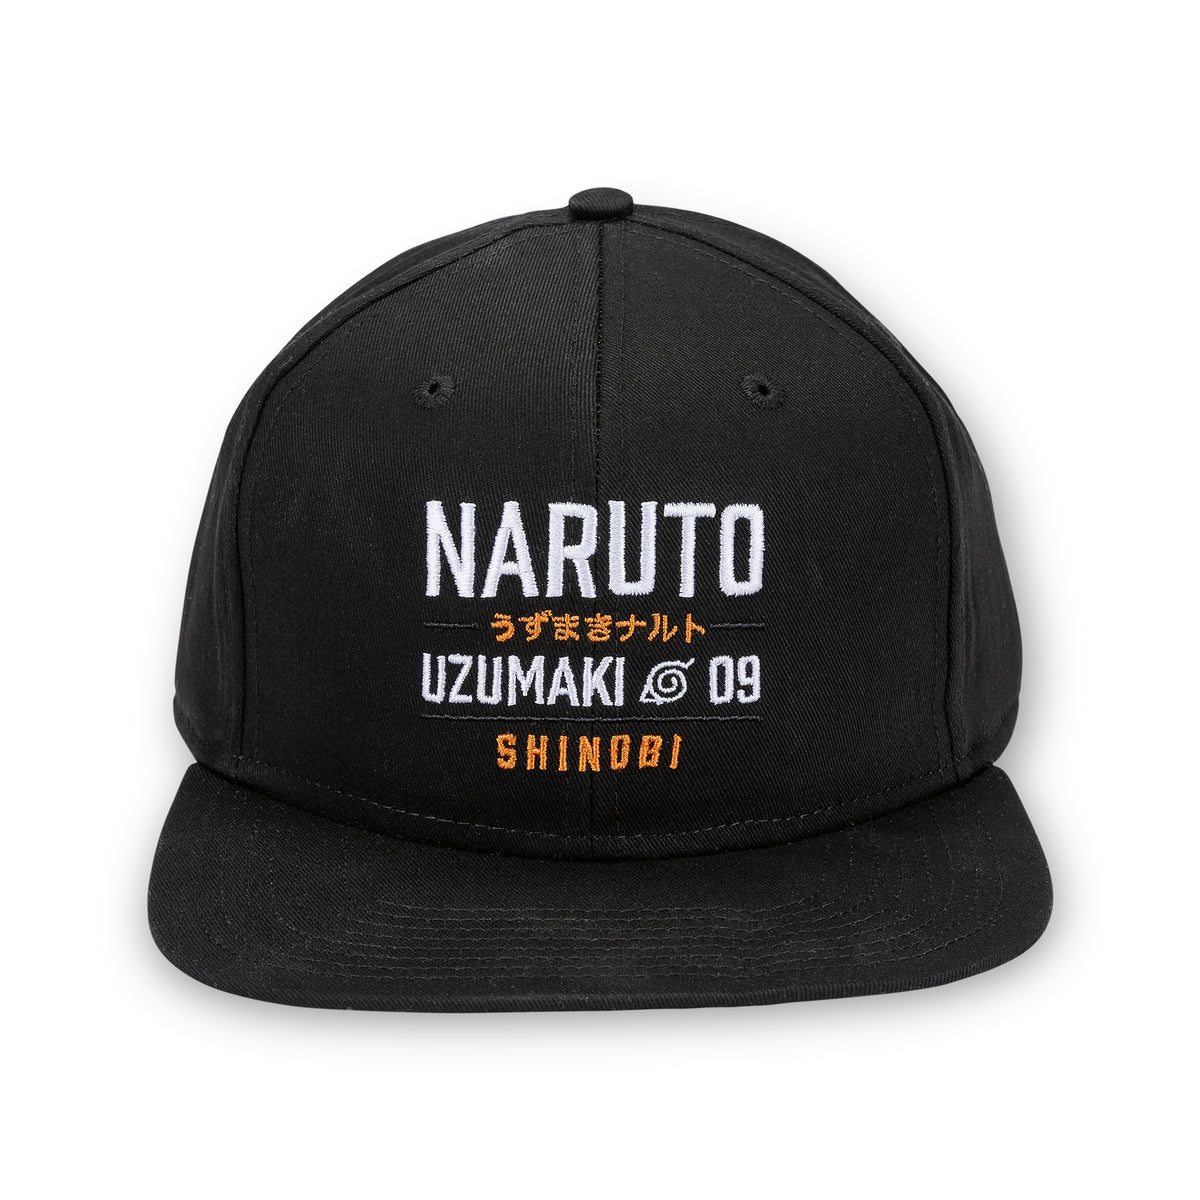 Naruto Uzumaki Shinobi Snapback Cap